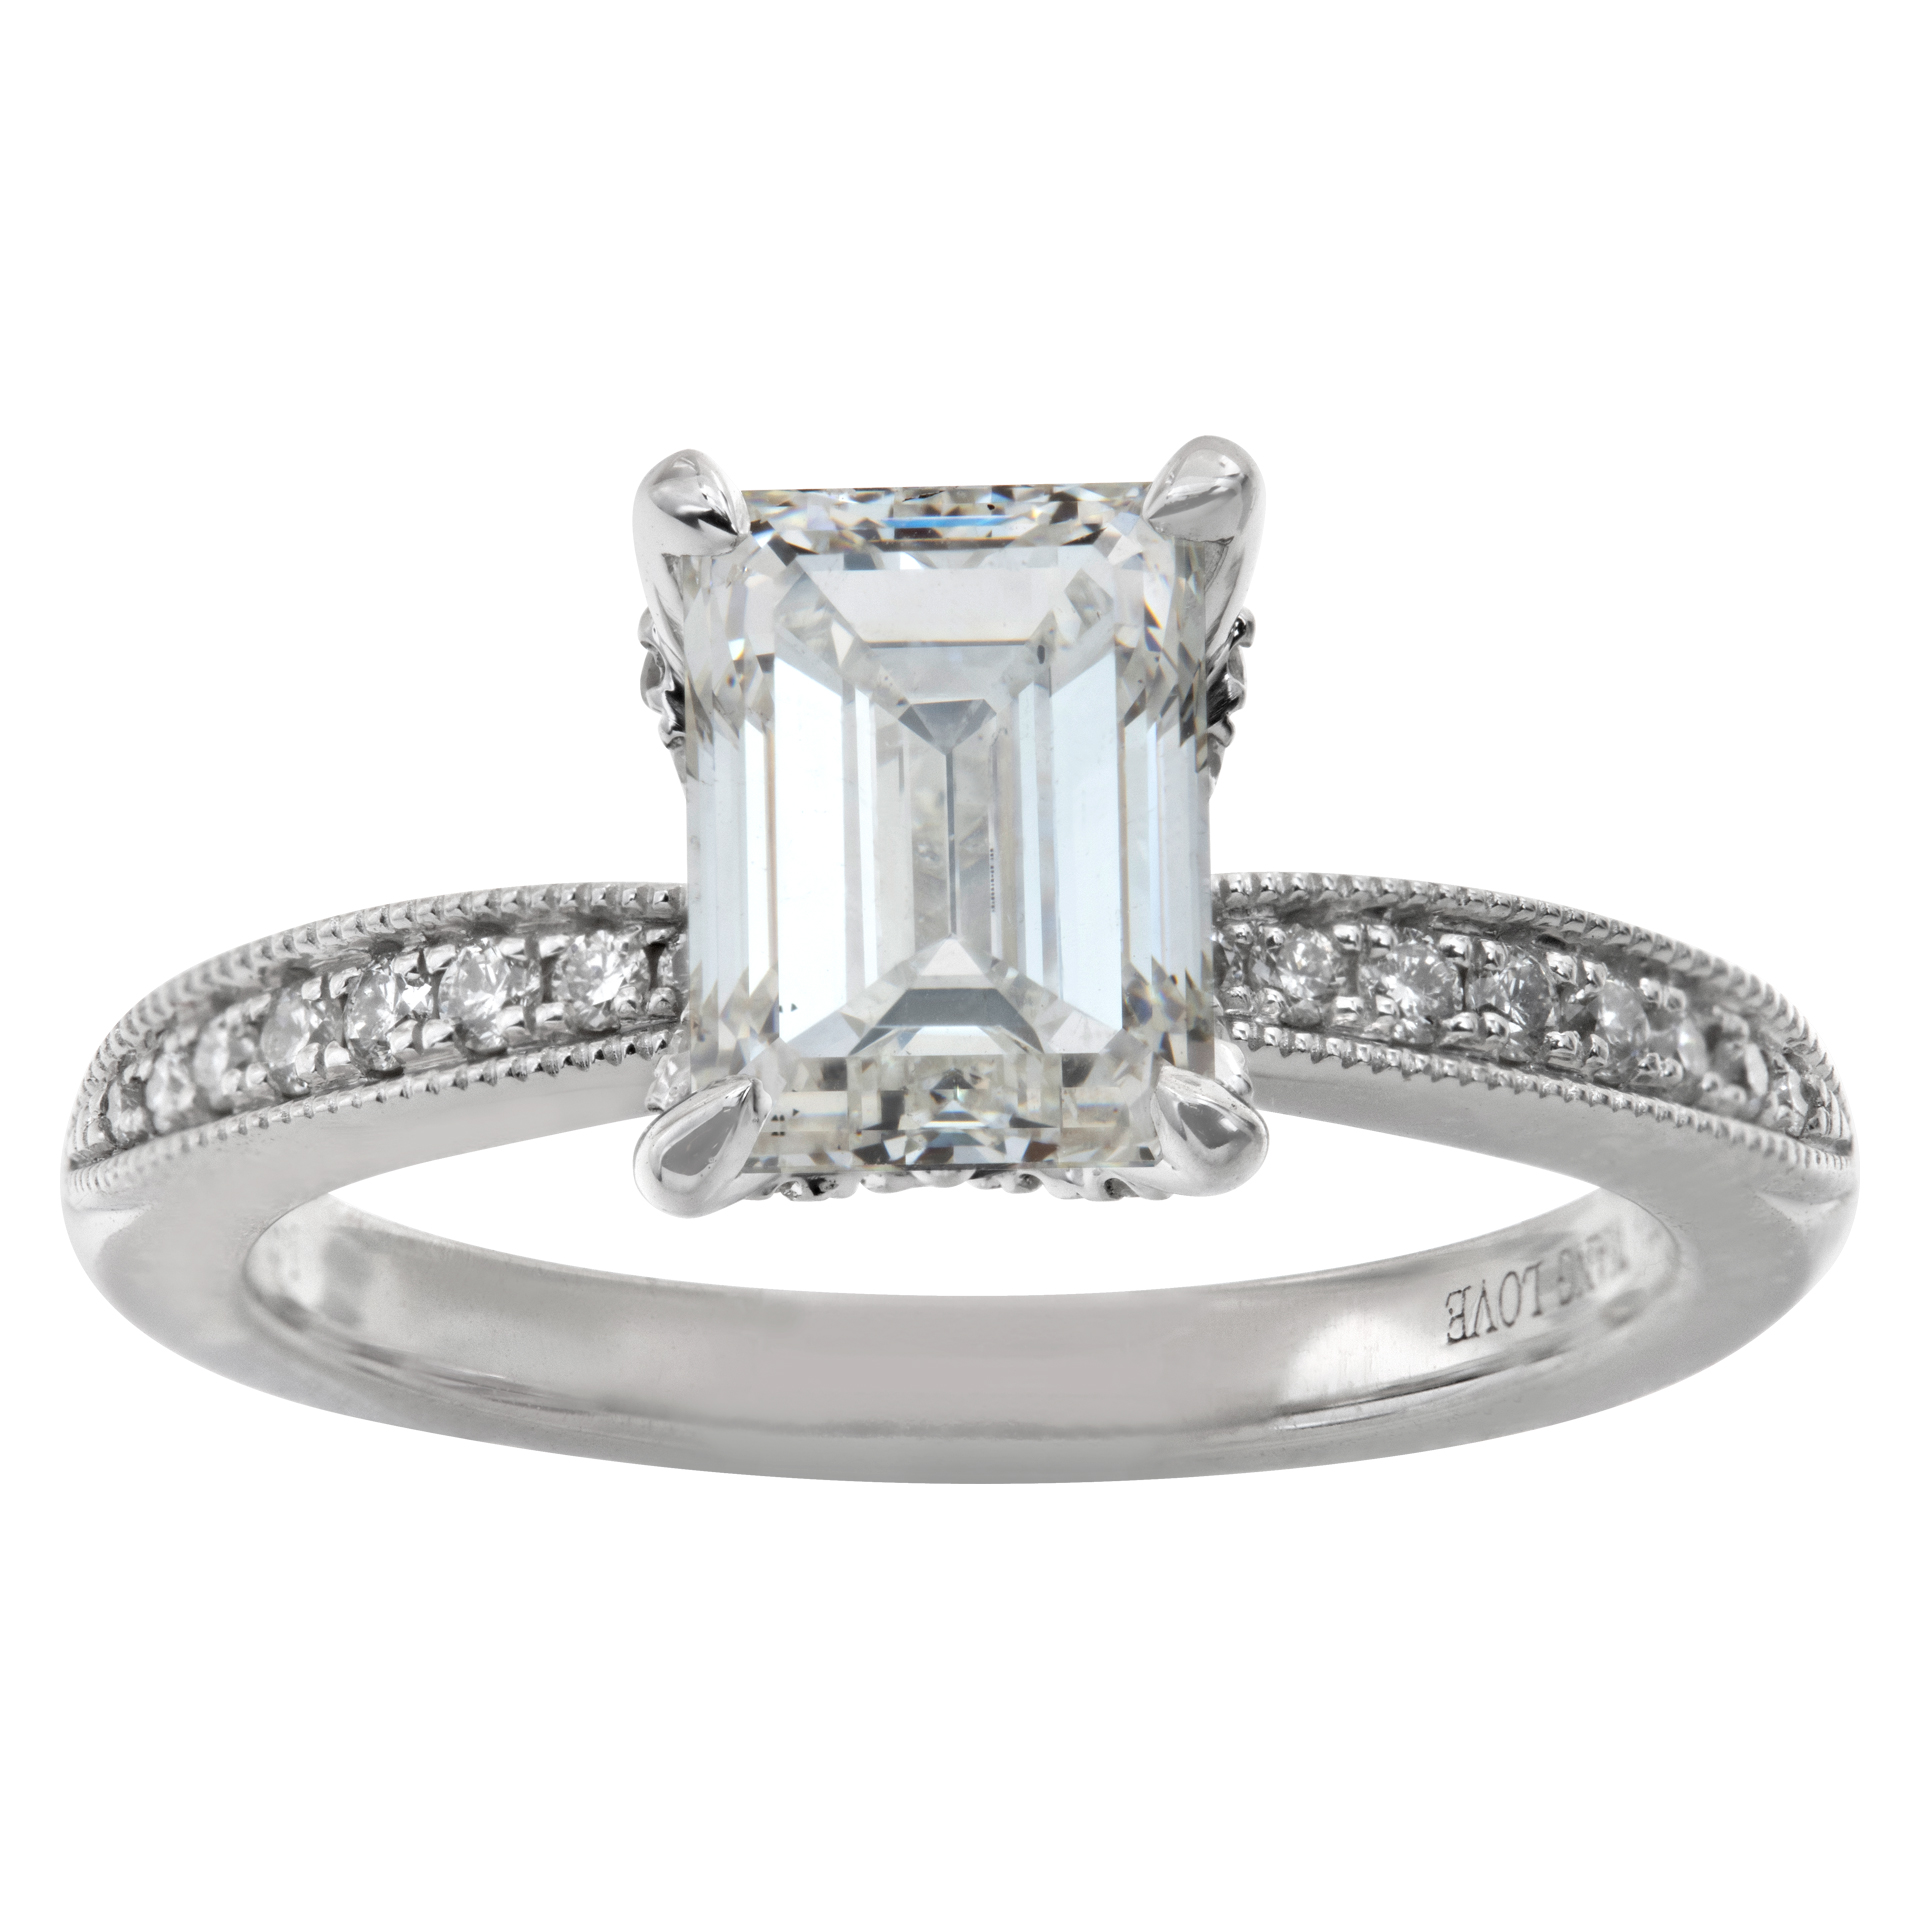 GIA certified emerald cut diamond 2.00 carat (H color, SI2 clarity) set in Vera Wang setting (Stones)